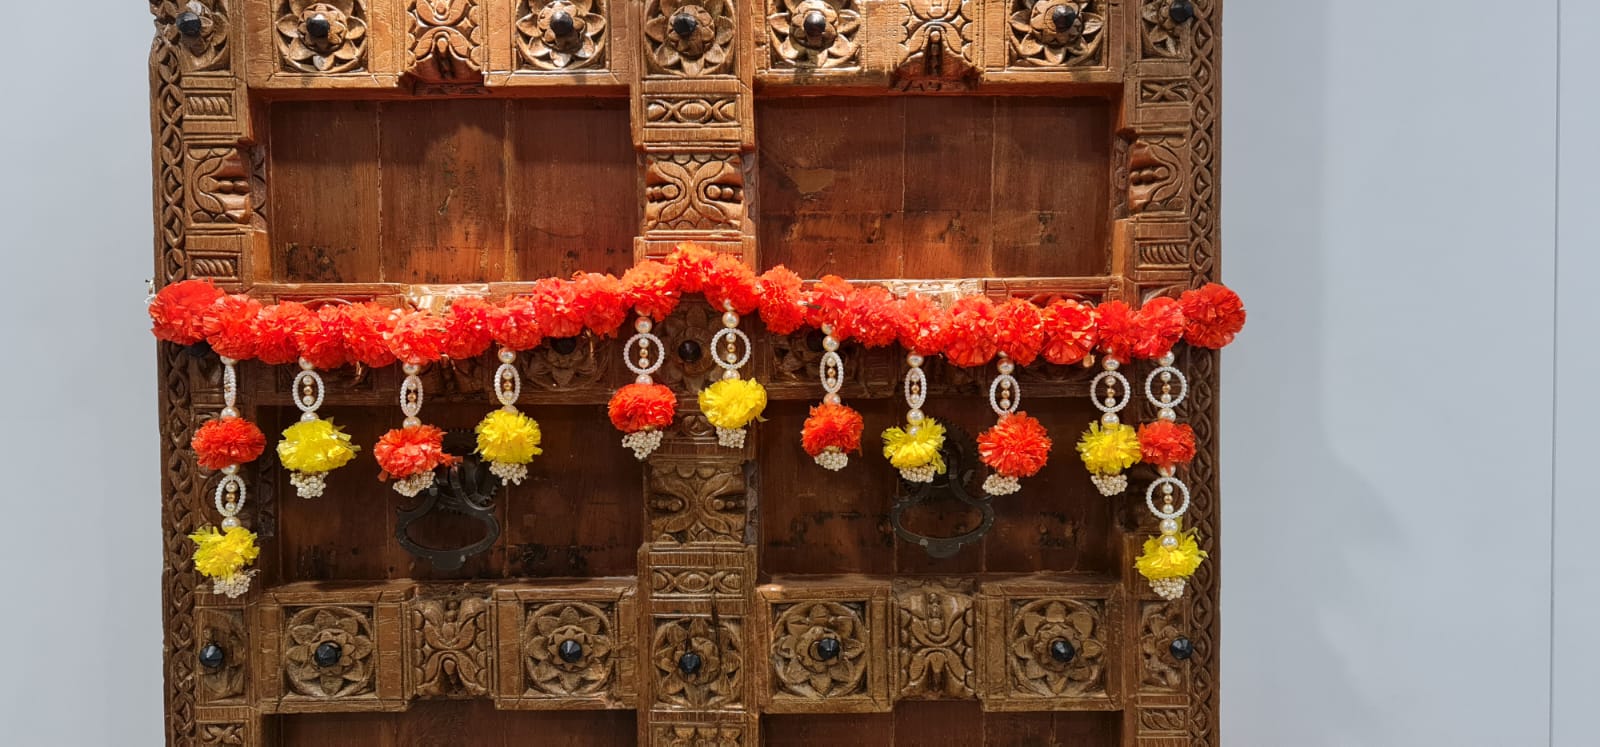 (DESIGN 7) SATYAM KRAFT 1 pcs Handmade Bhandanwar Toran colourful hanging for decorating your home, Hall, backdrop, Entrance Main door decor for New Year, Inauguration Wedding, Diwali, Navratri, Festival.